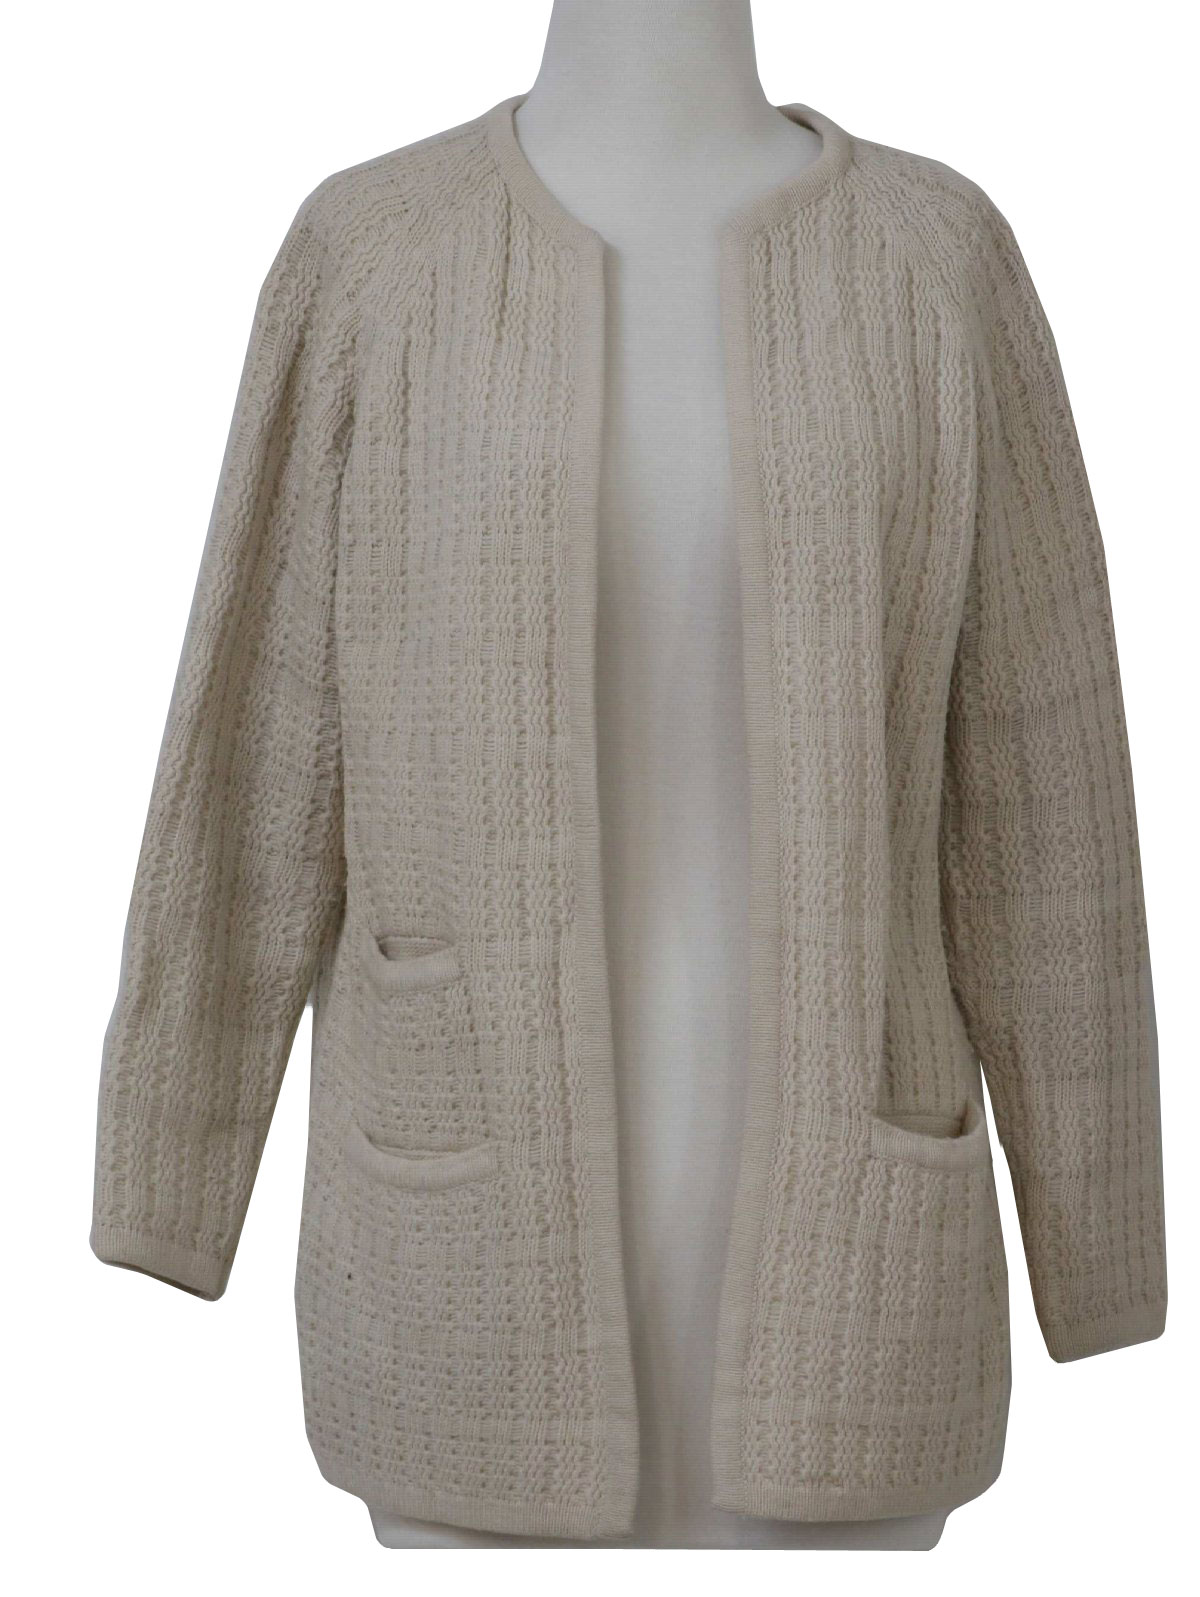 Seventies LeRoy Caridgan Sweater: 70 -LeRoy- Womens cream cable knit ...